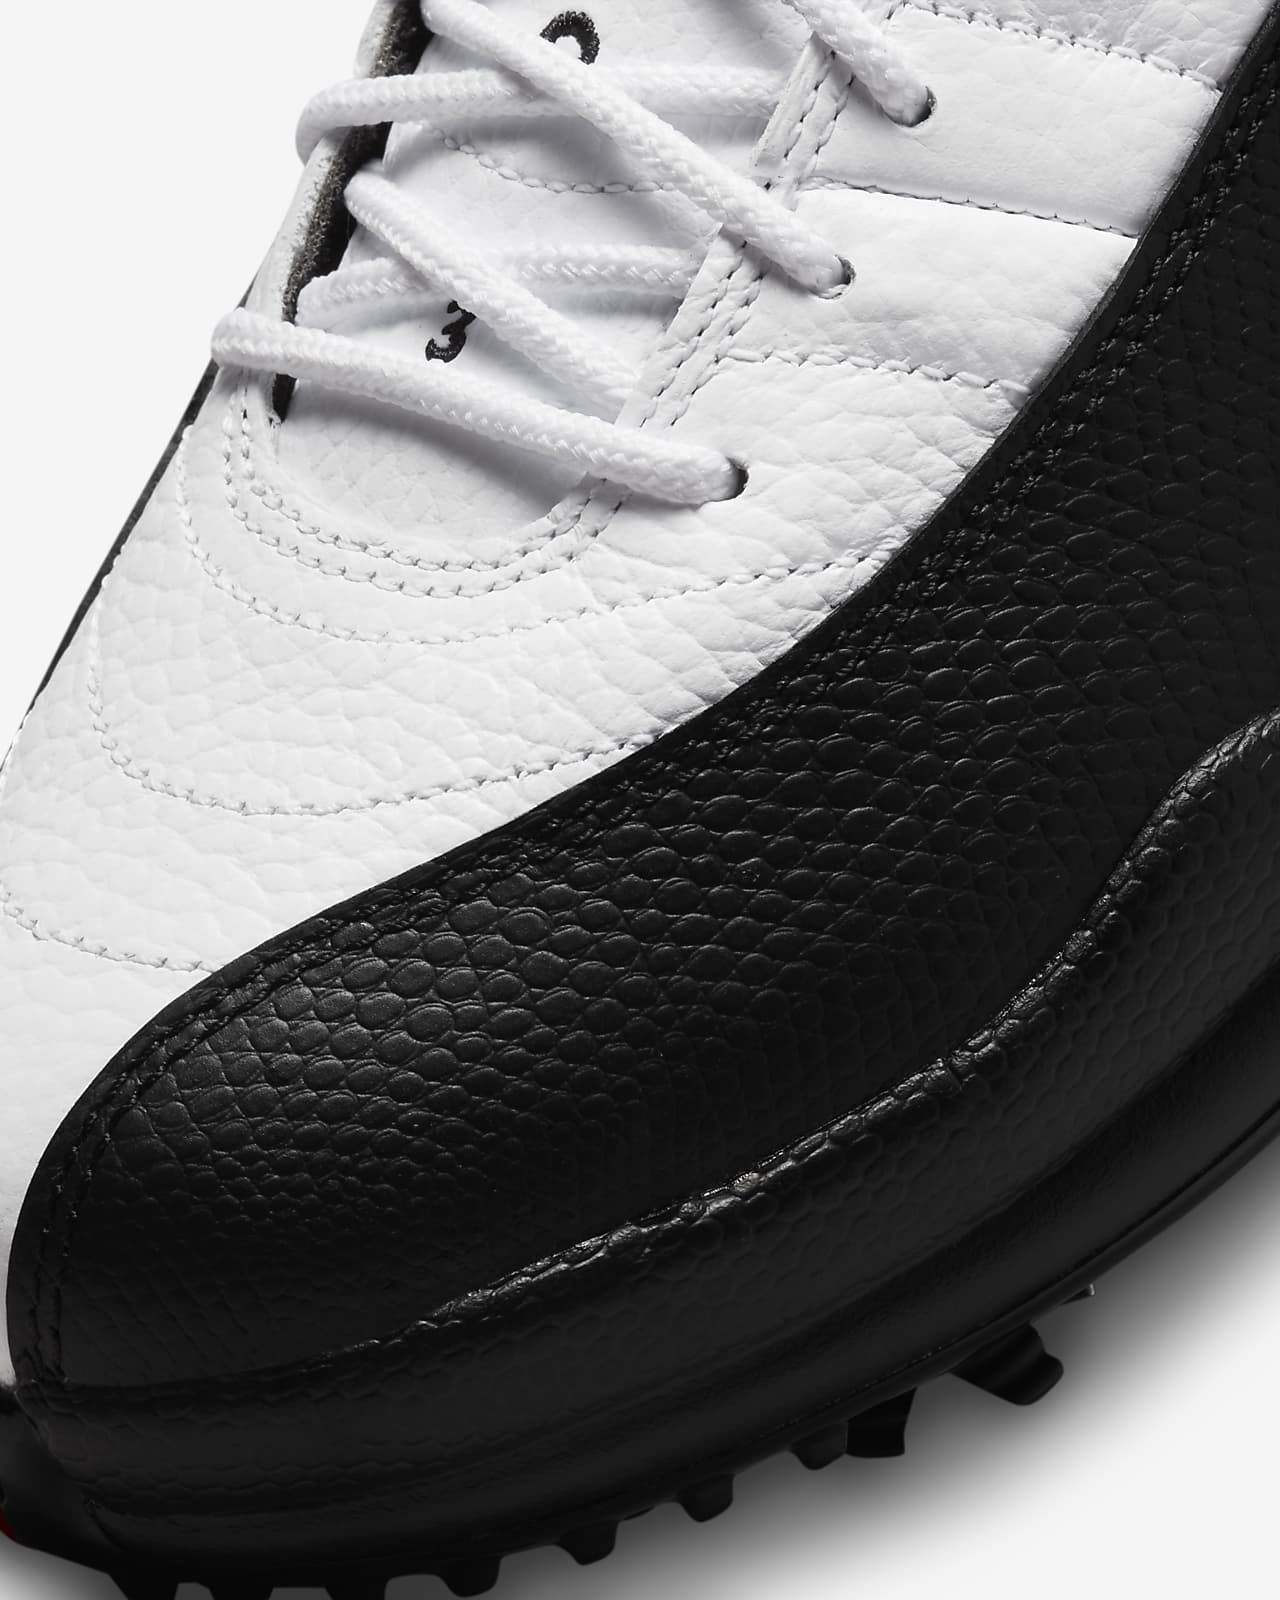 Air Jordan XII Low Golf Shoes